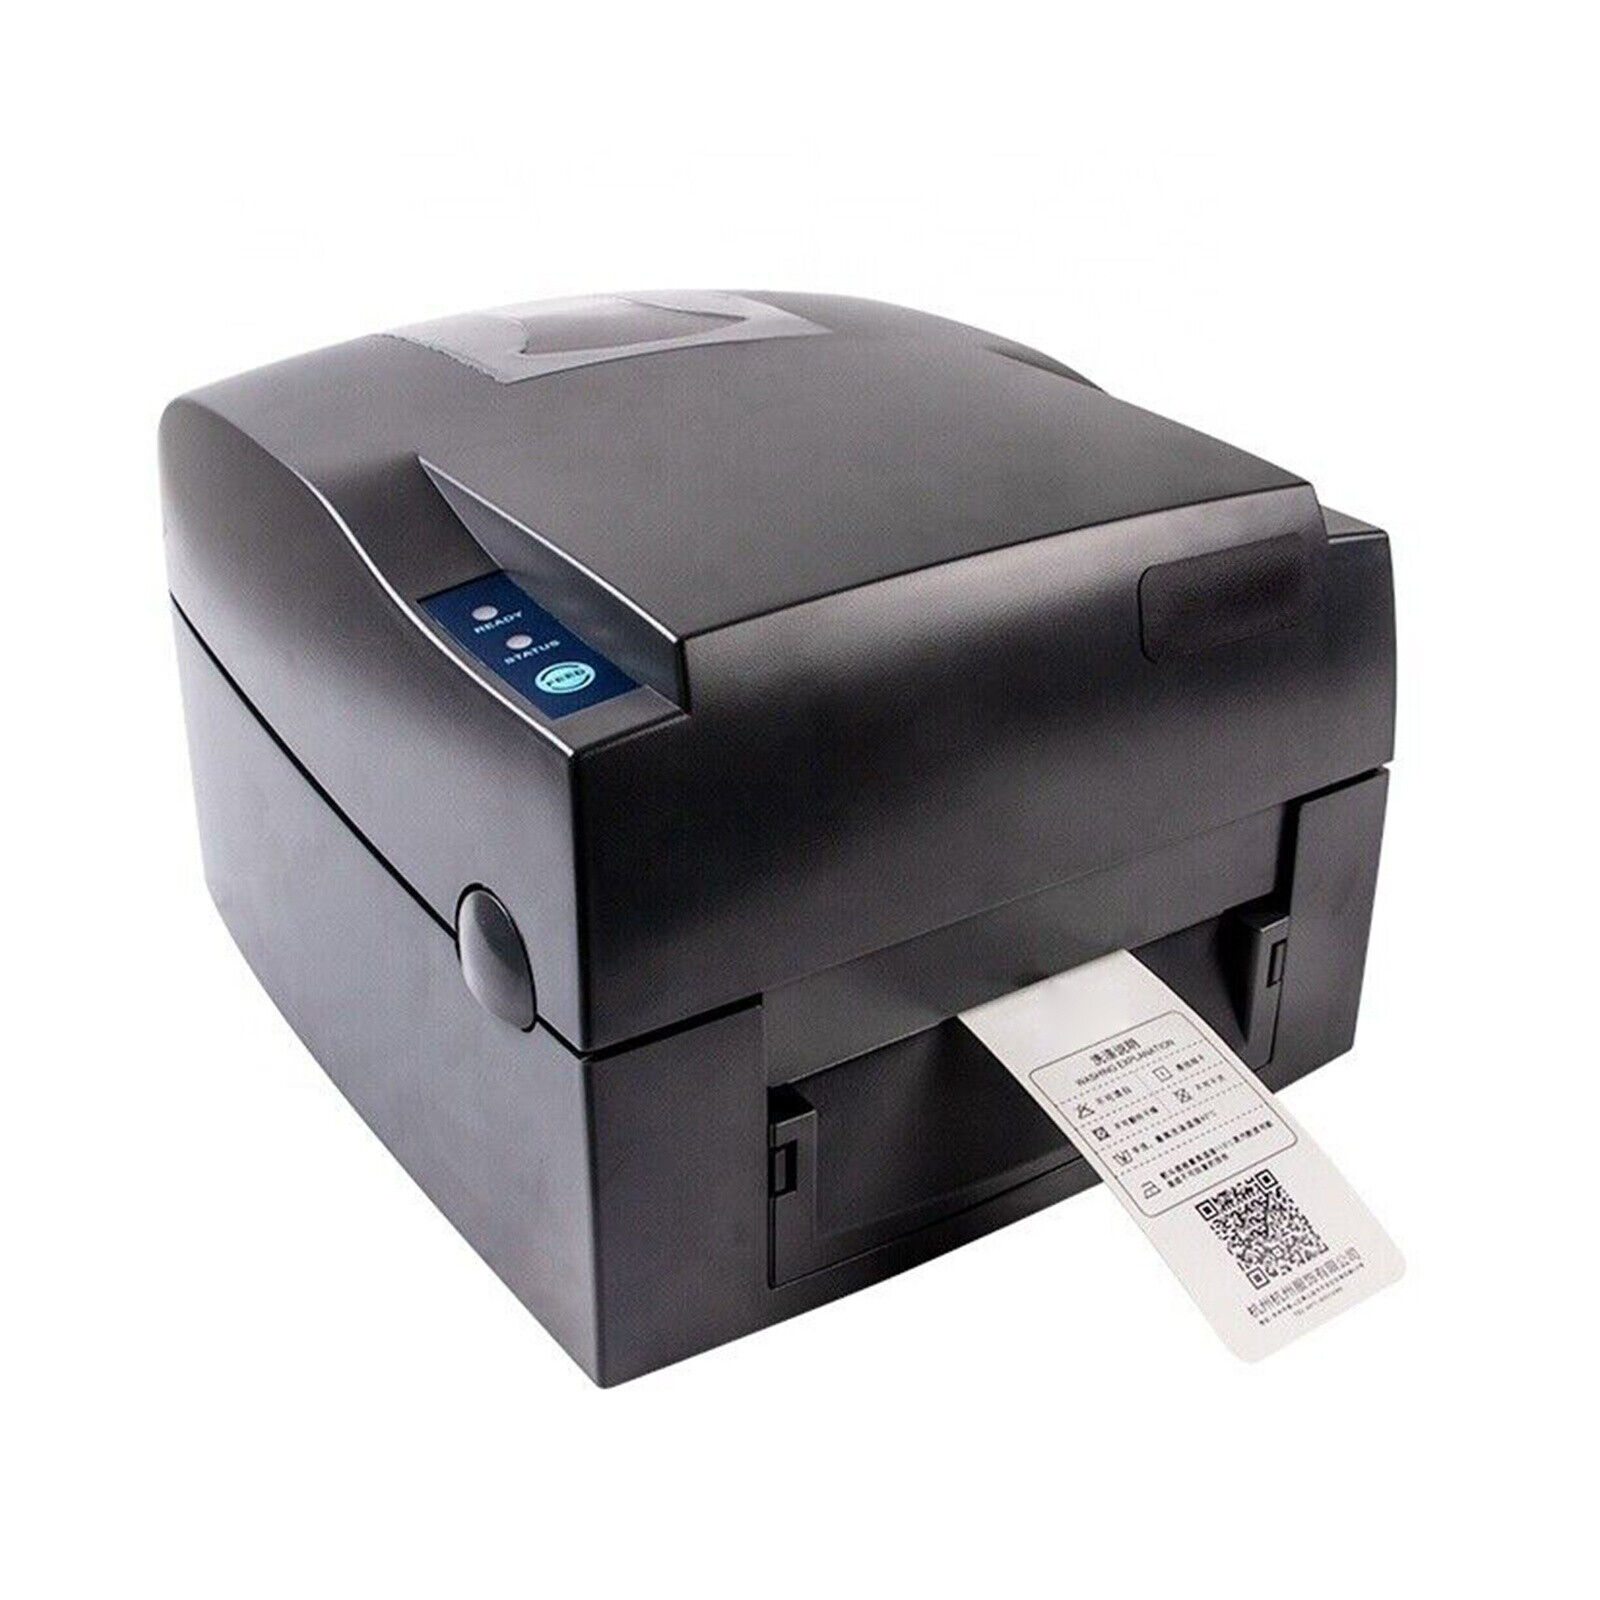 NEW Godex G500u Water Label Printer USB 203dpi Thermal Label Barcode Printer 4L